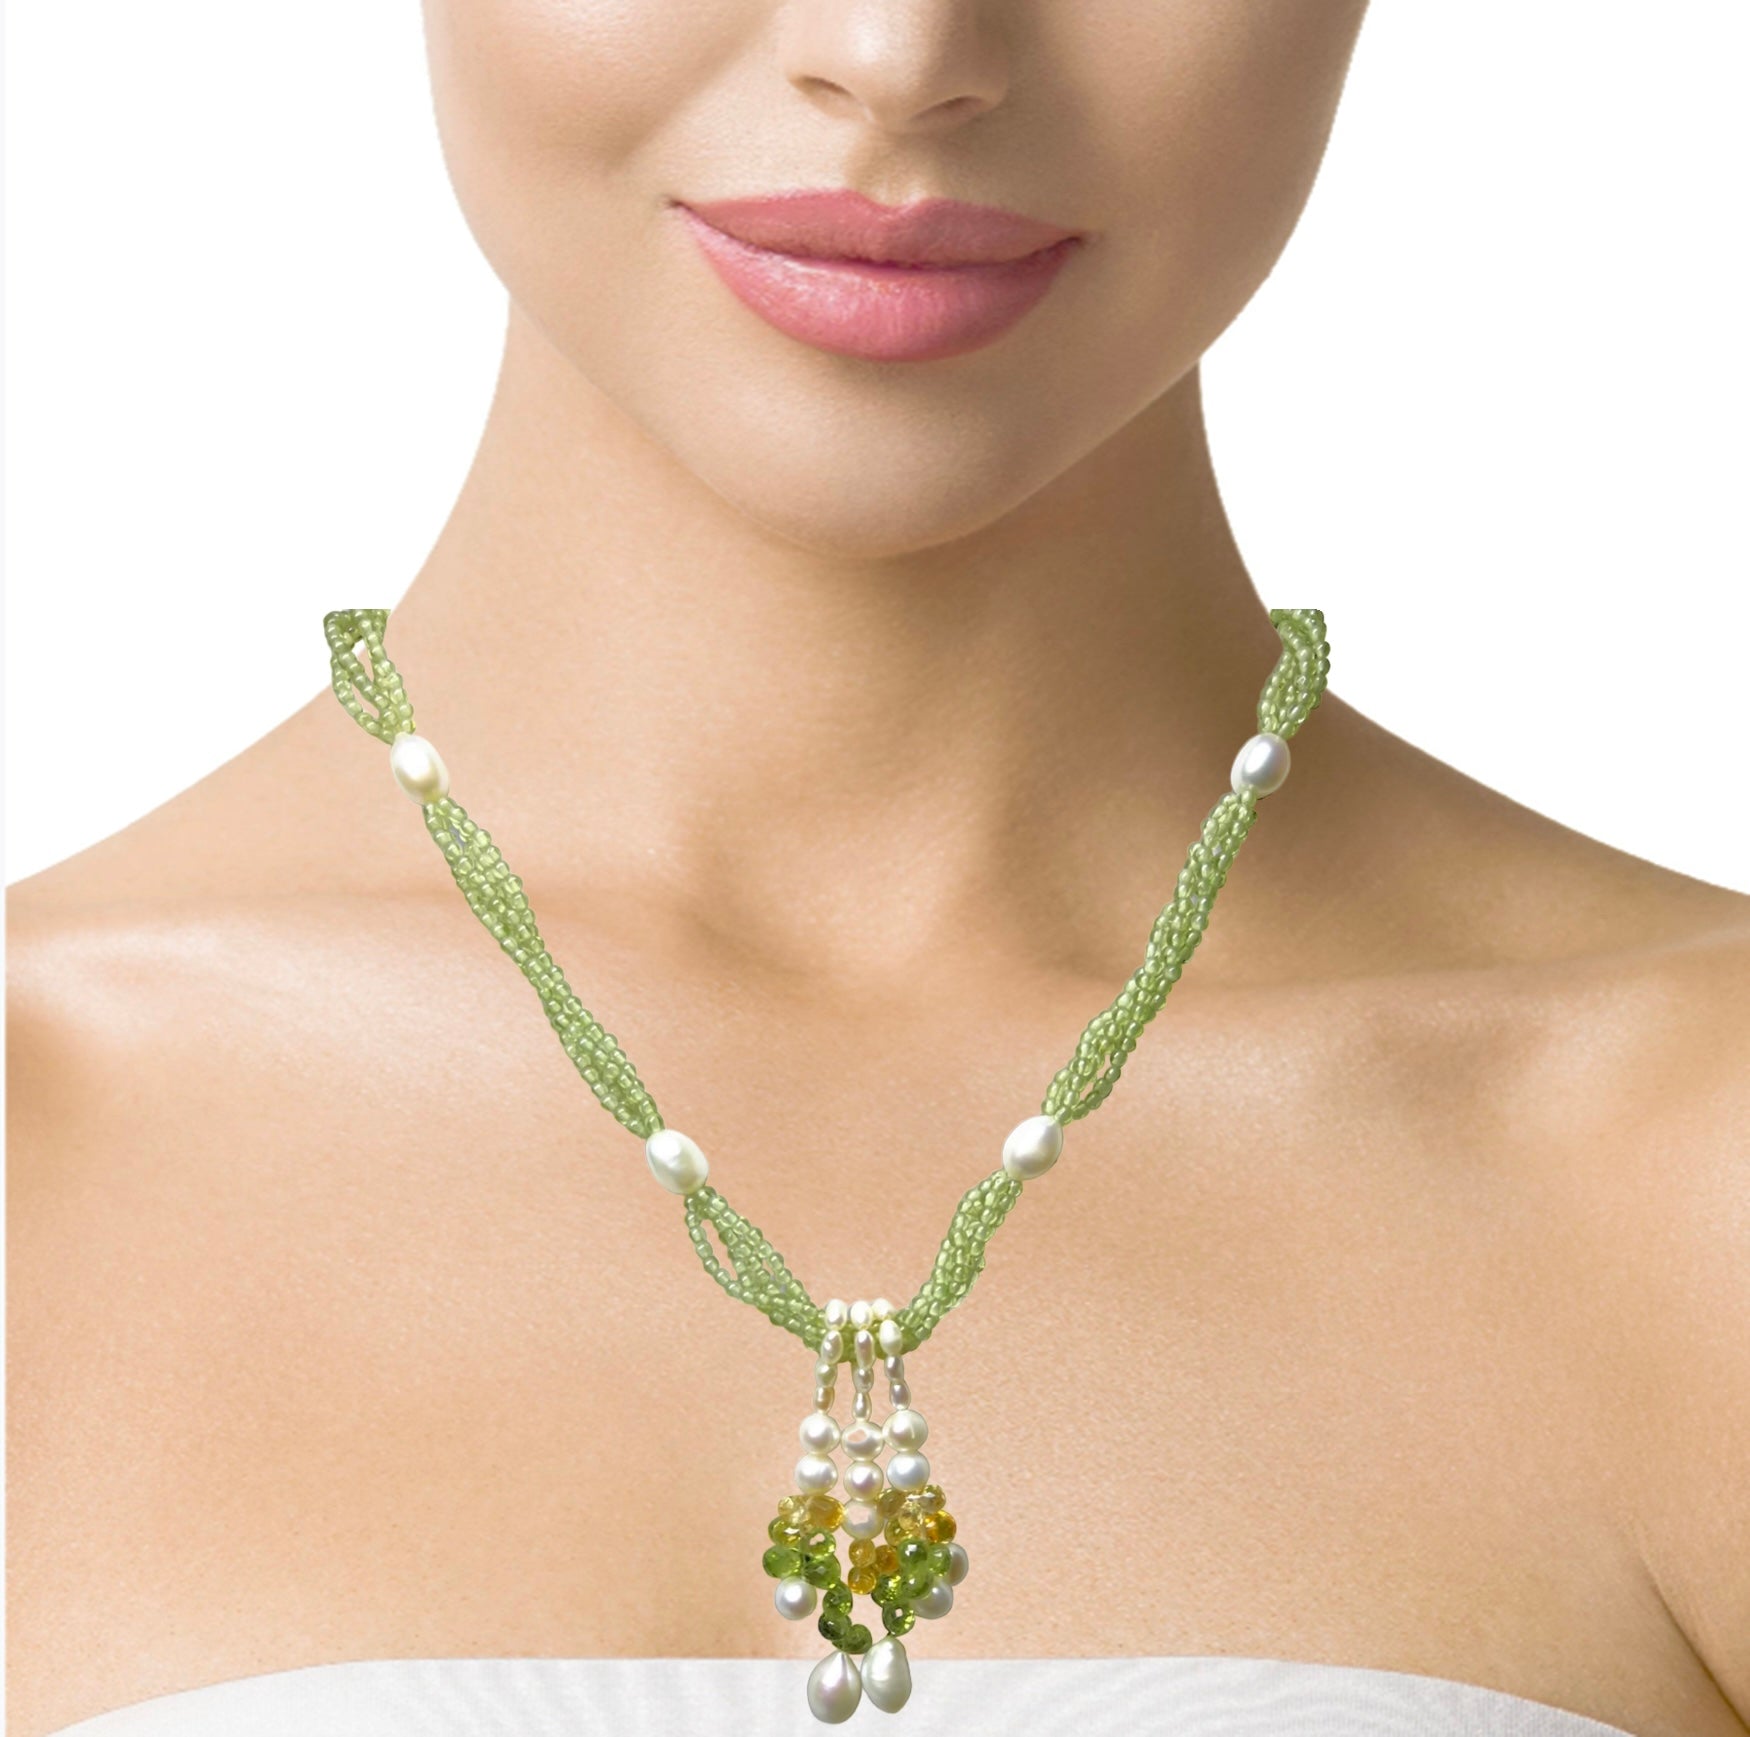 Natural Handmade Necklace 16"-18" Peridot, Citrine, Pearls Gemstone Beads Jewelry